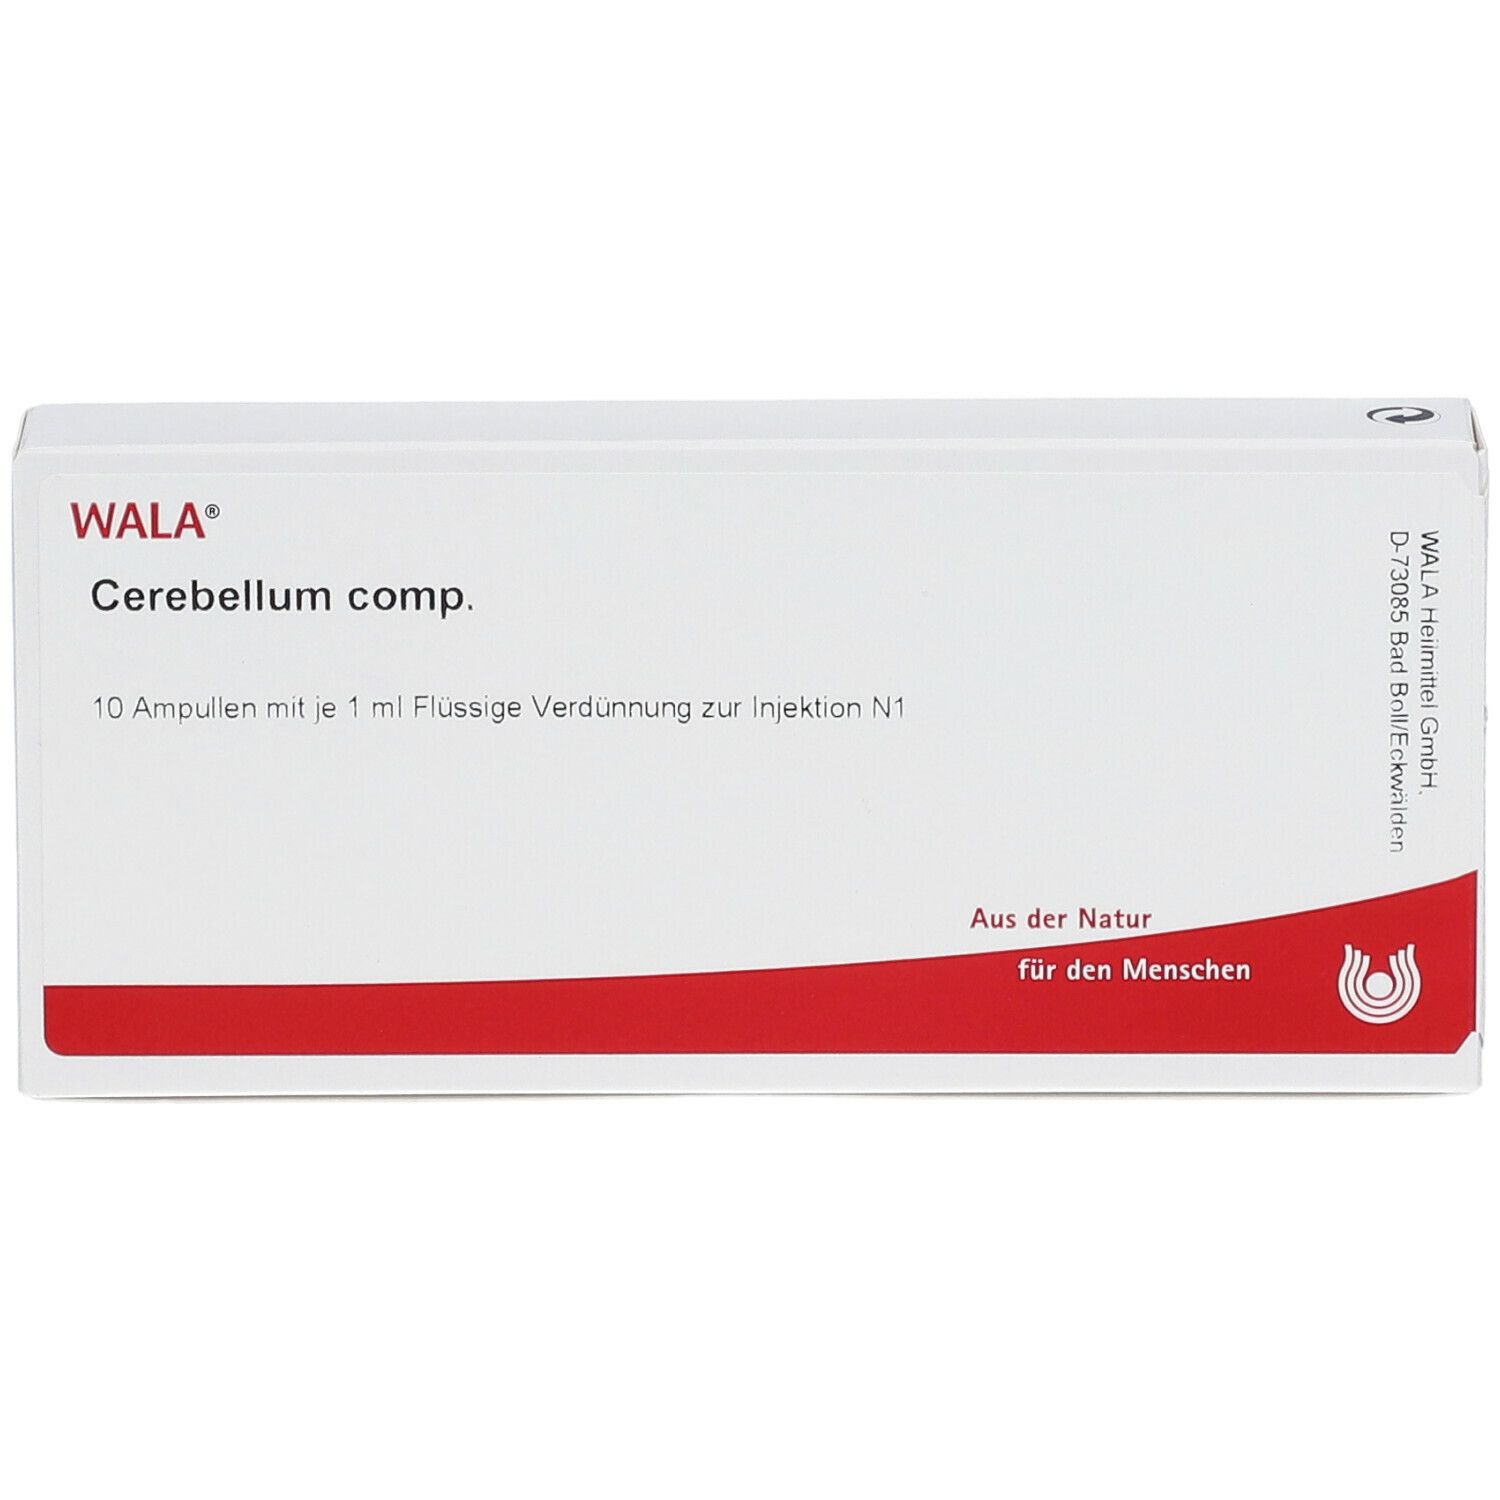 WALA® Cerebellum Comp. Amp.